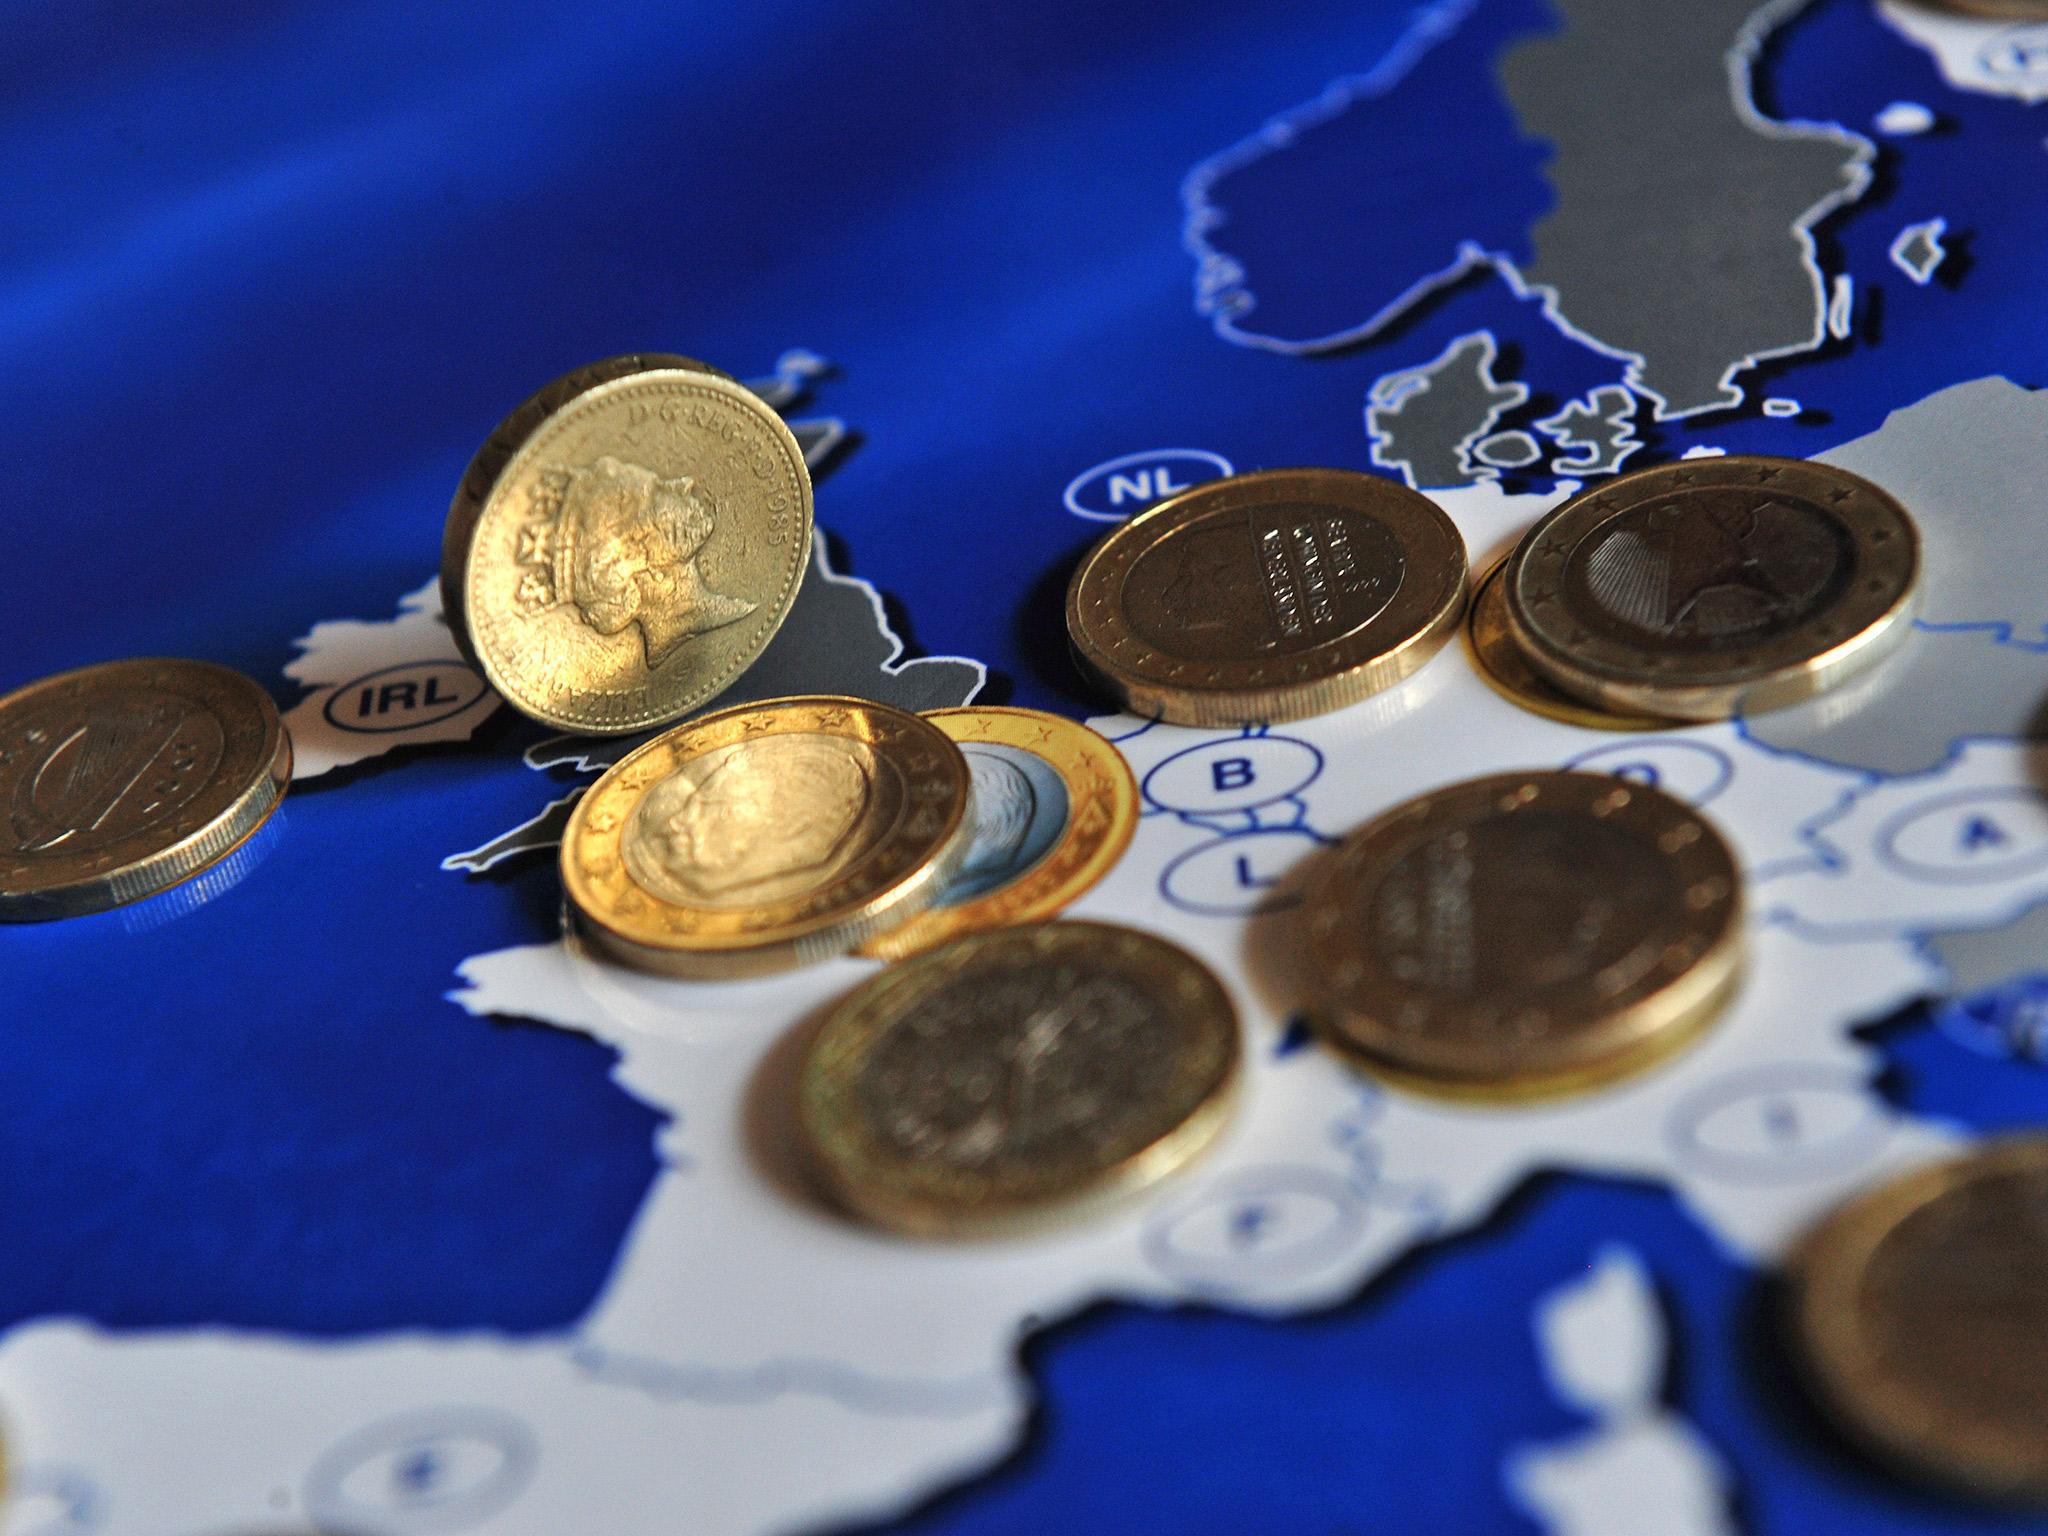 Market uncertainty over the EU referendum has seen sterling slide